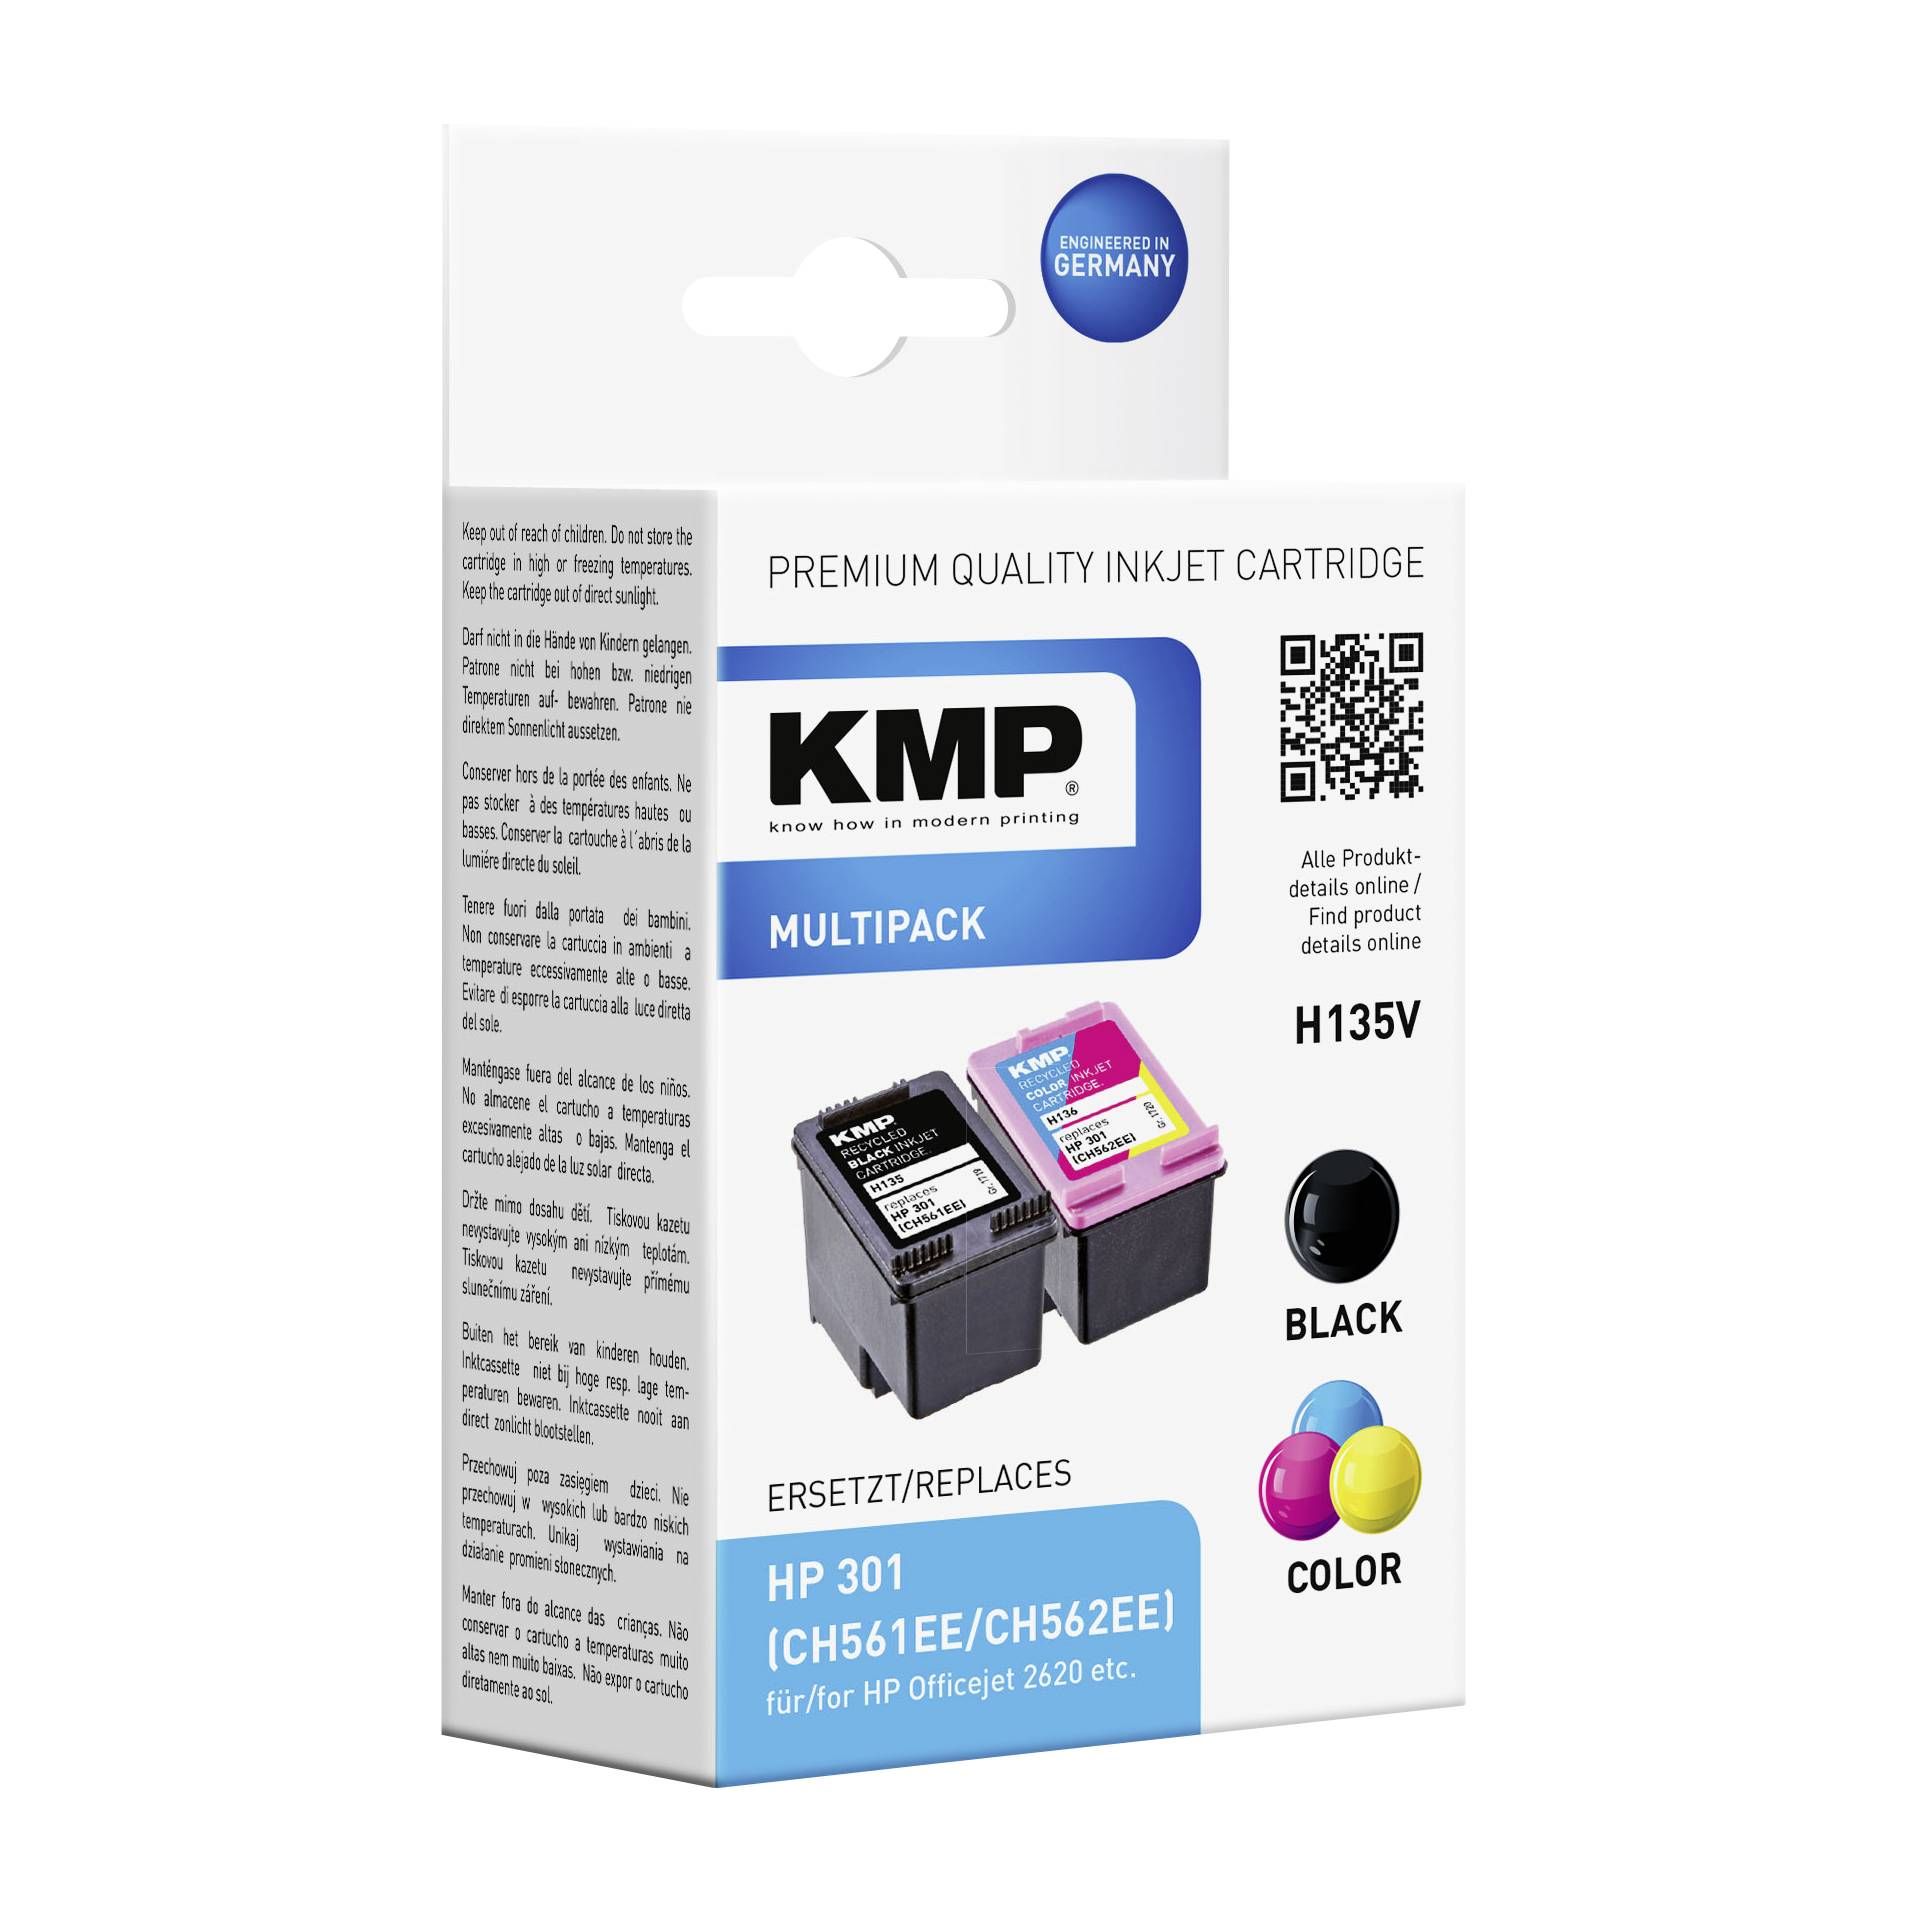 KMP H135V Multipack BK/Color compatibile con HP CH 561/562